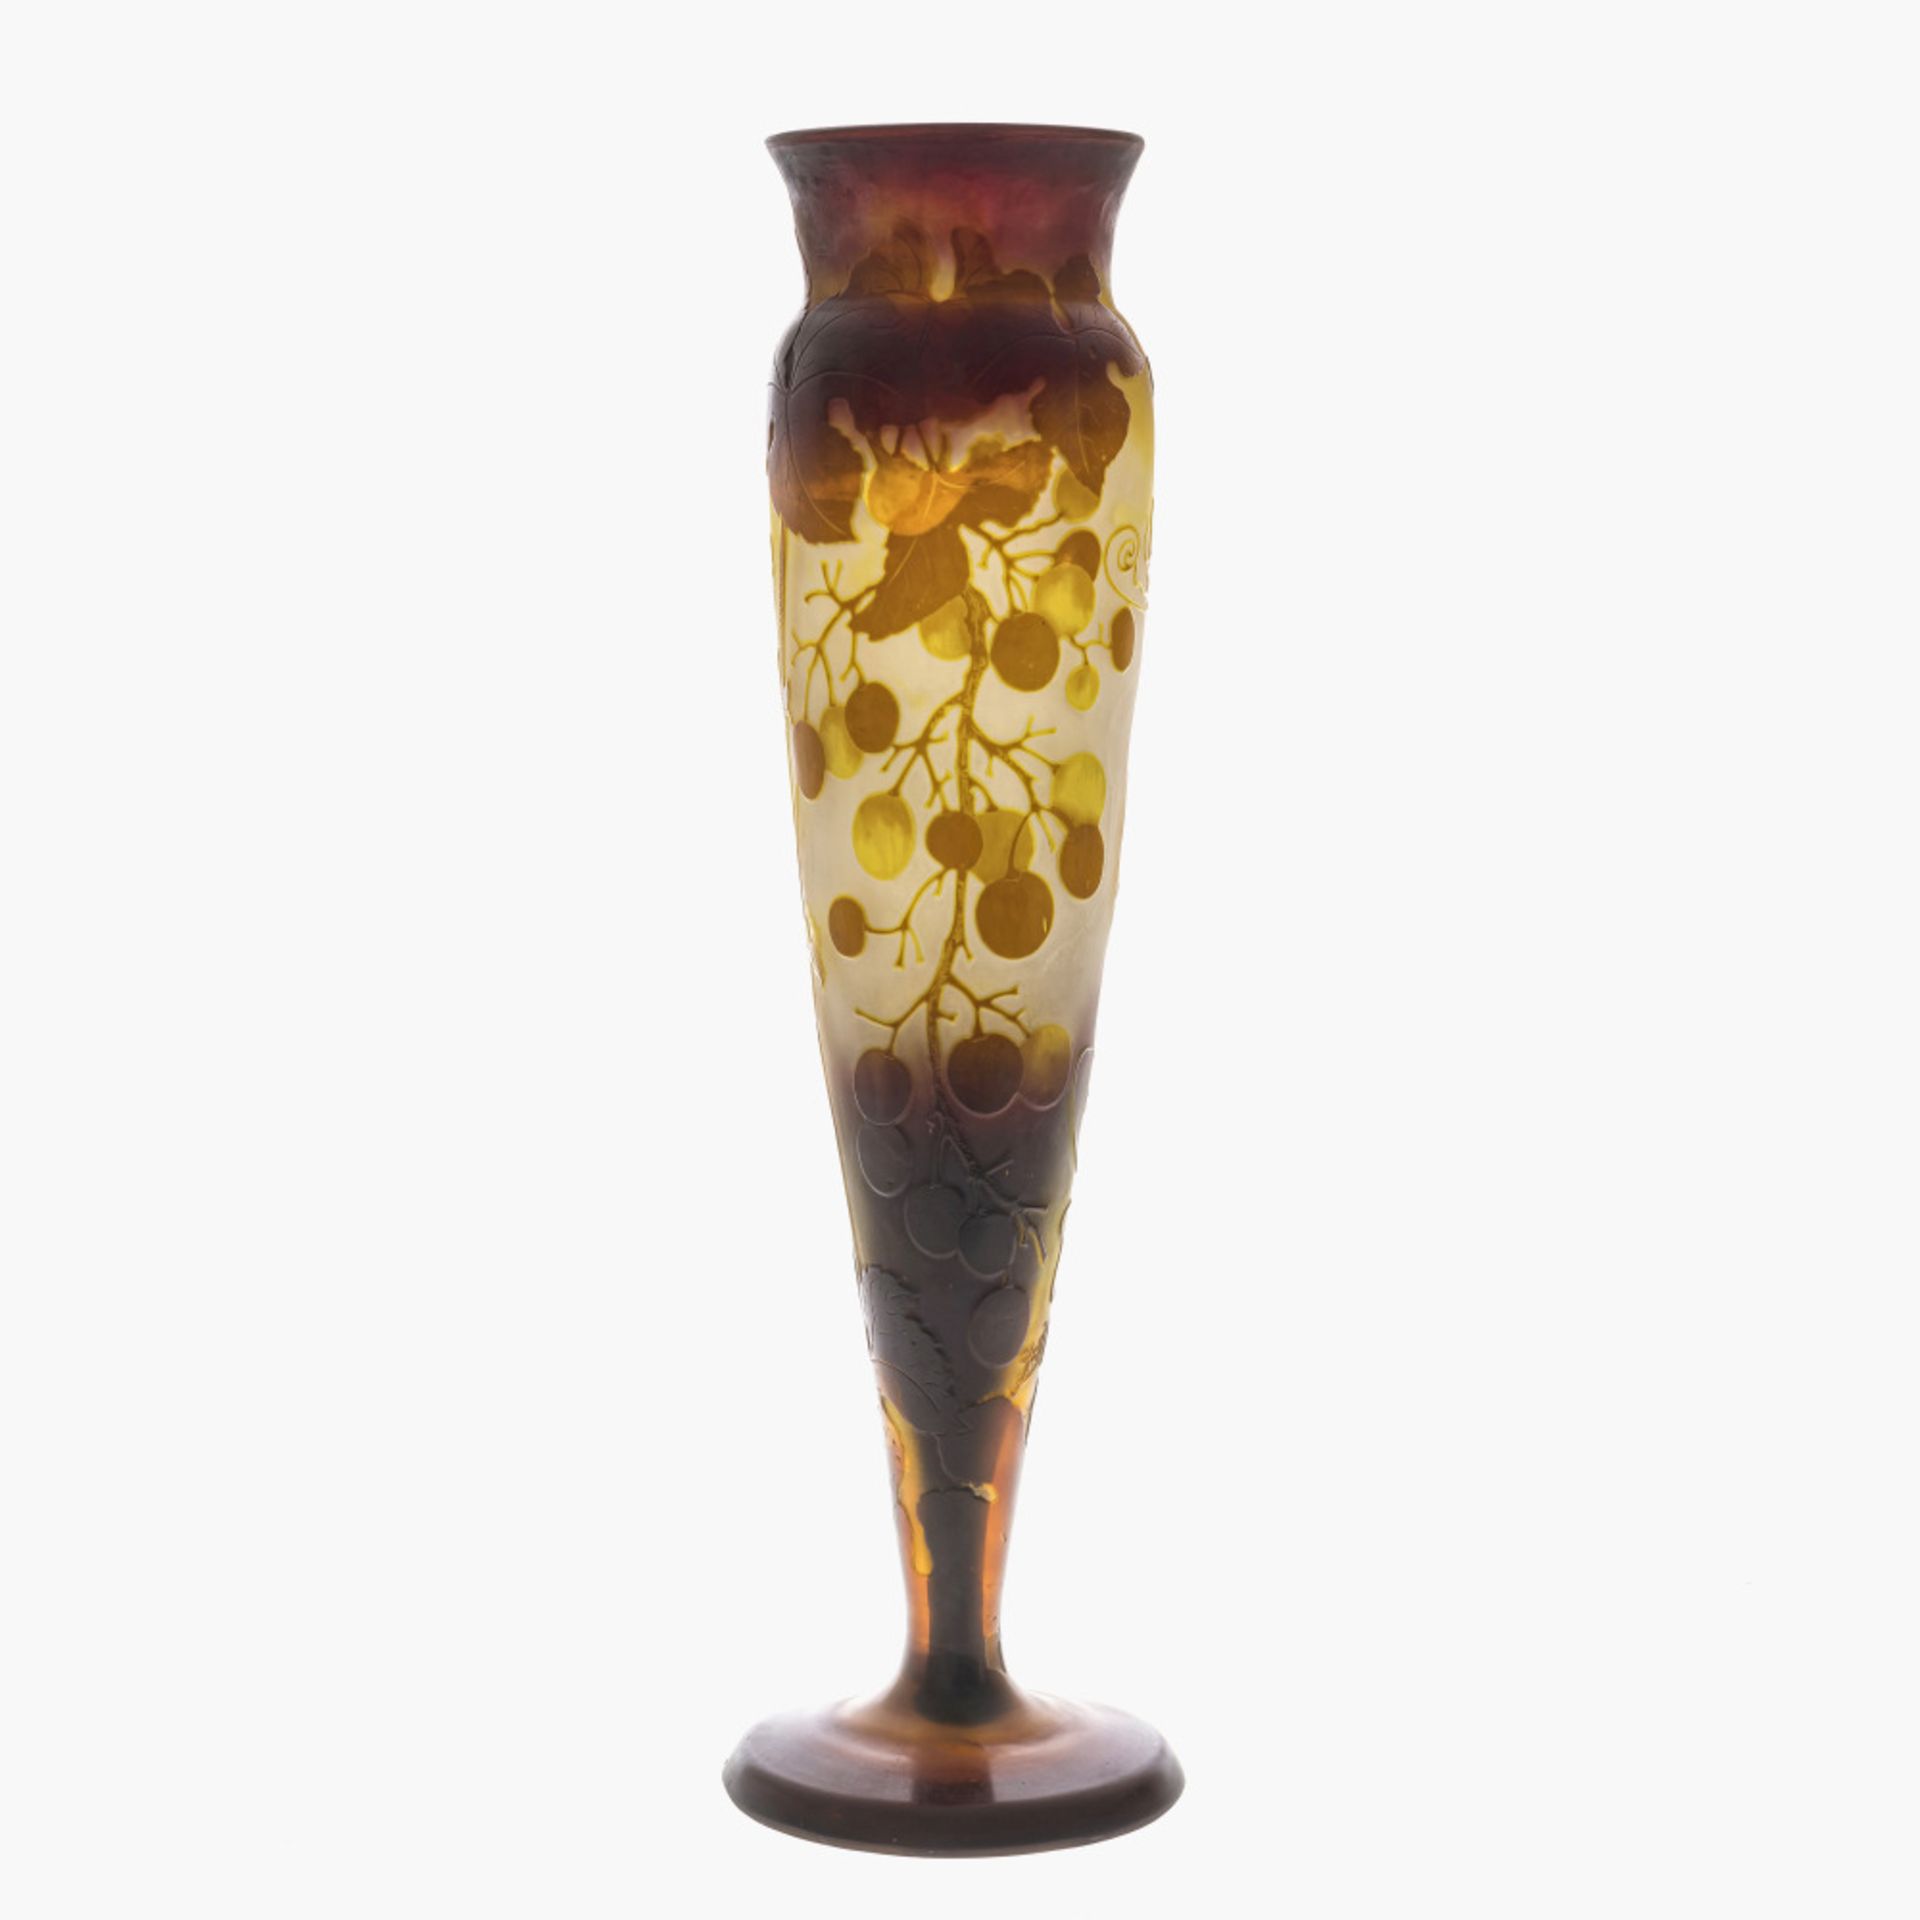 A vase - Emile Gallé, Nancy, 1900-1910